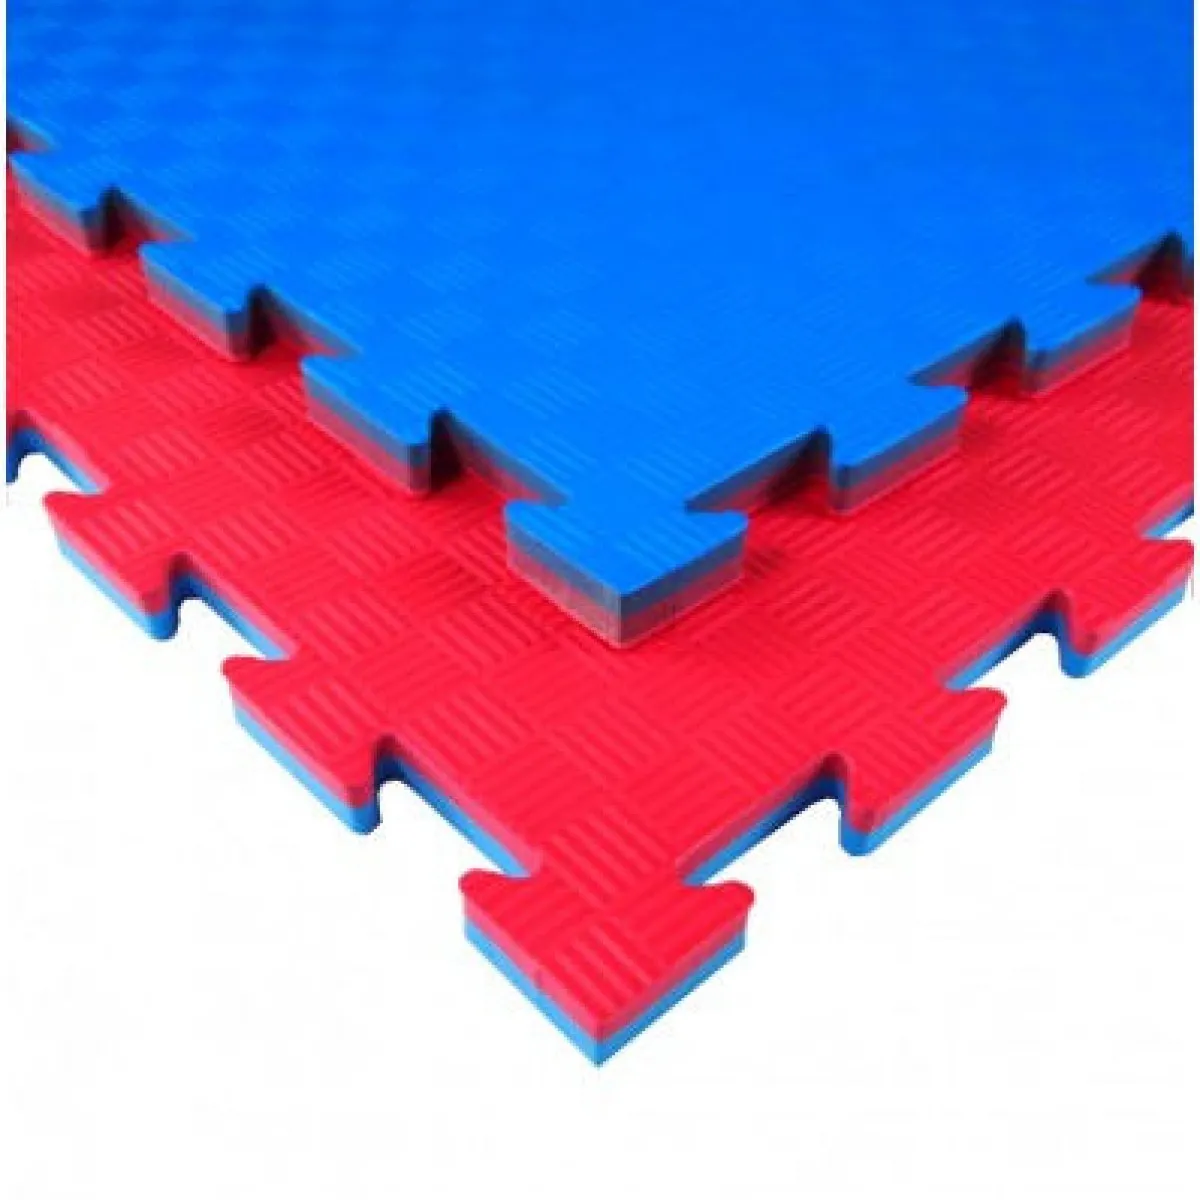 Tatami martial arts mat TK20X blue/red 100 cm x 100 cm x 2.1 cm